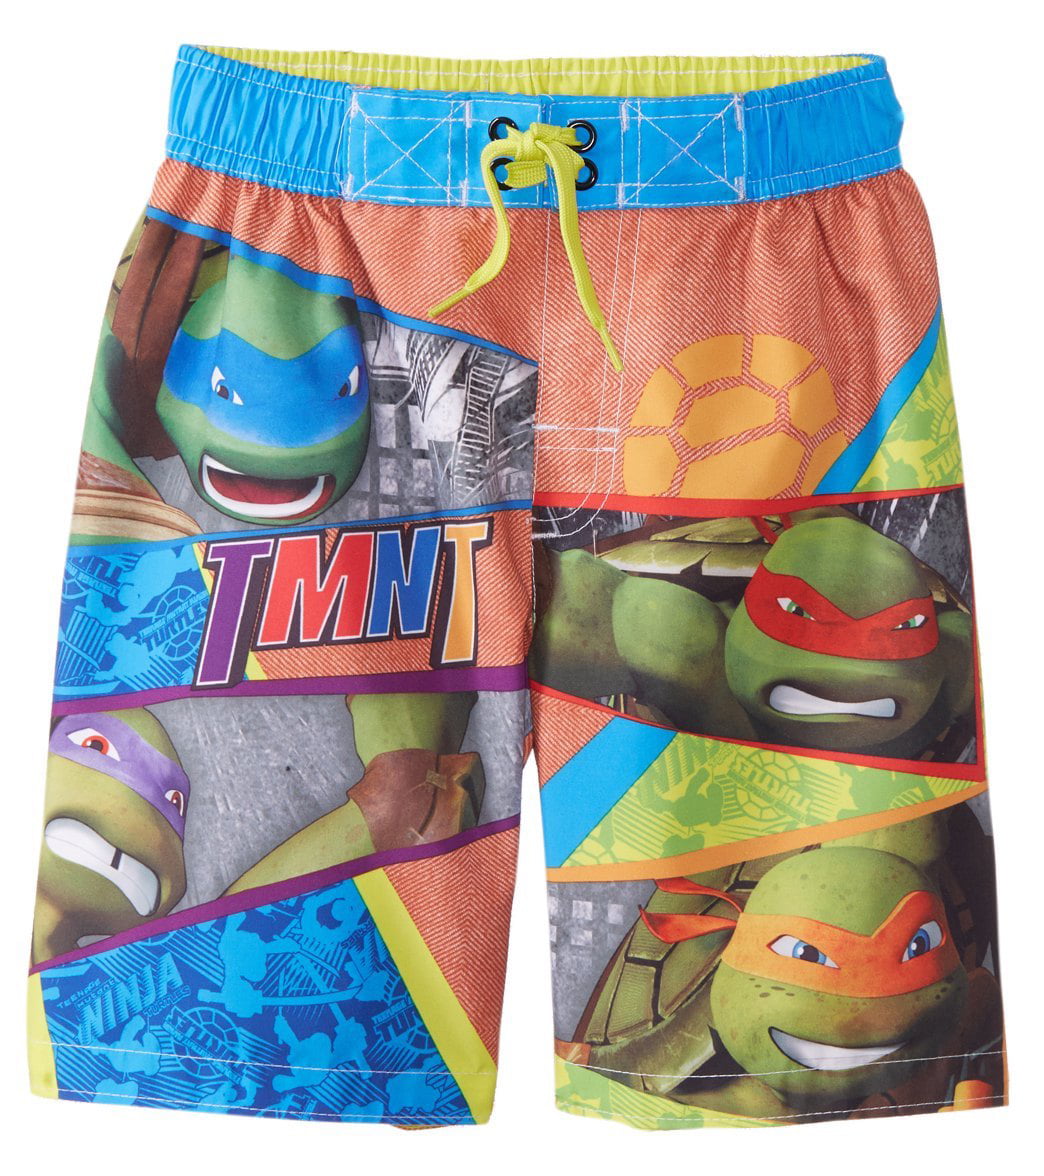 Boys All in One Swimming Suit Costume Swimwear Teenage Mutant Ninja Turtles 18-24 Months to 4-5 Years